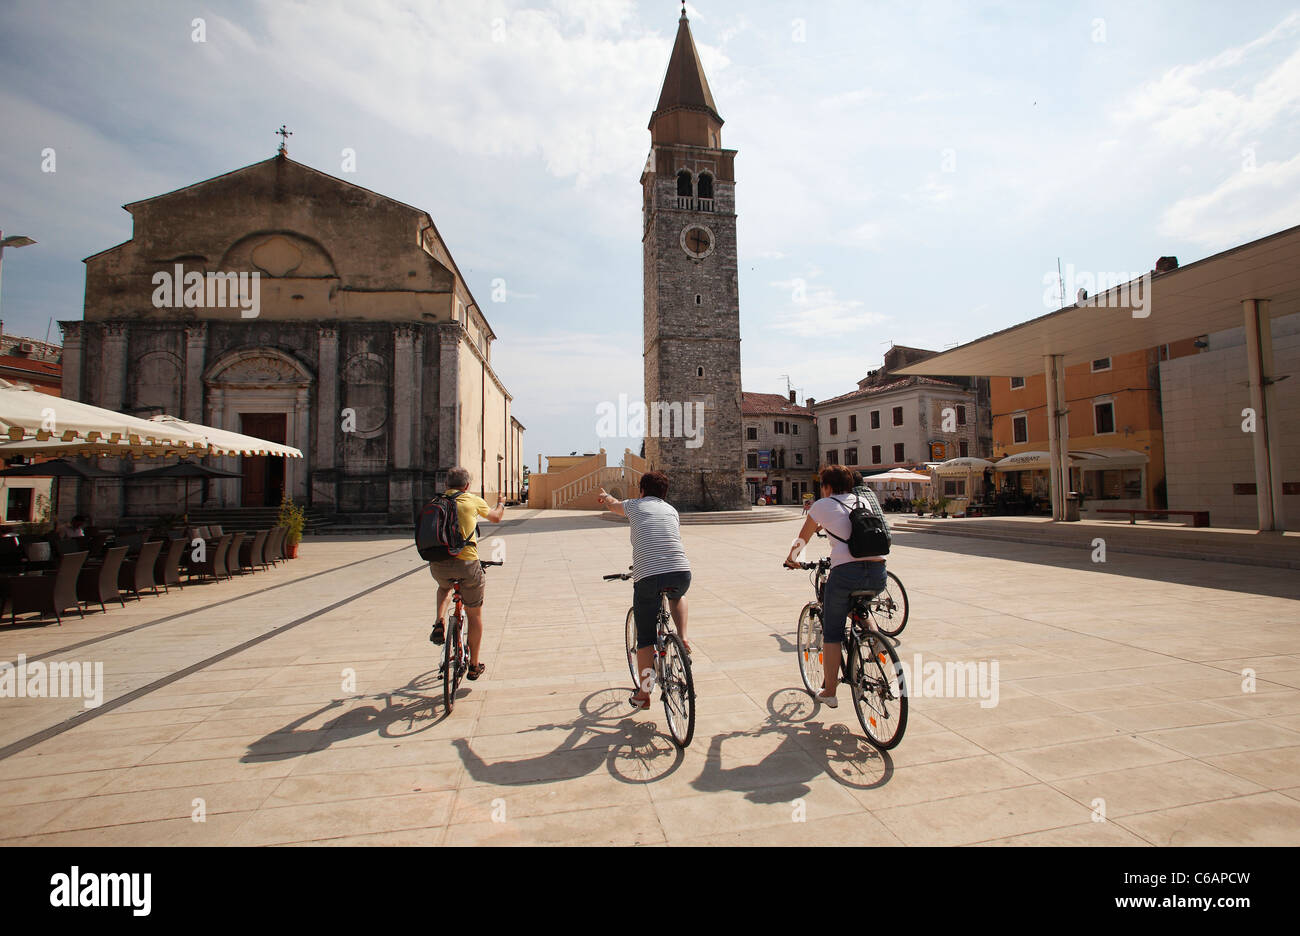 Tourists on bicycles in the Piazza Slobode Liberta, Umag,Croatia. Stock Photo